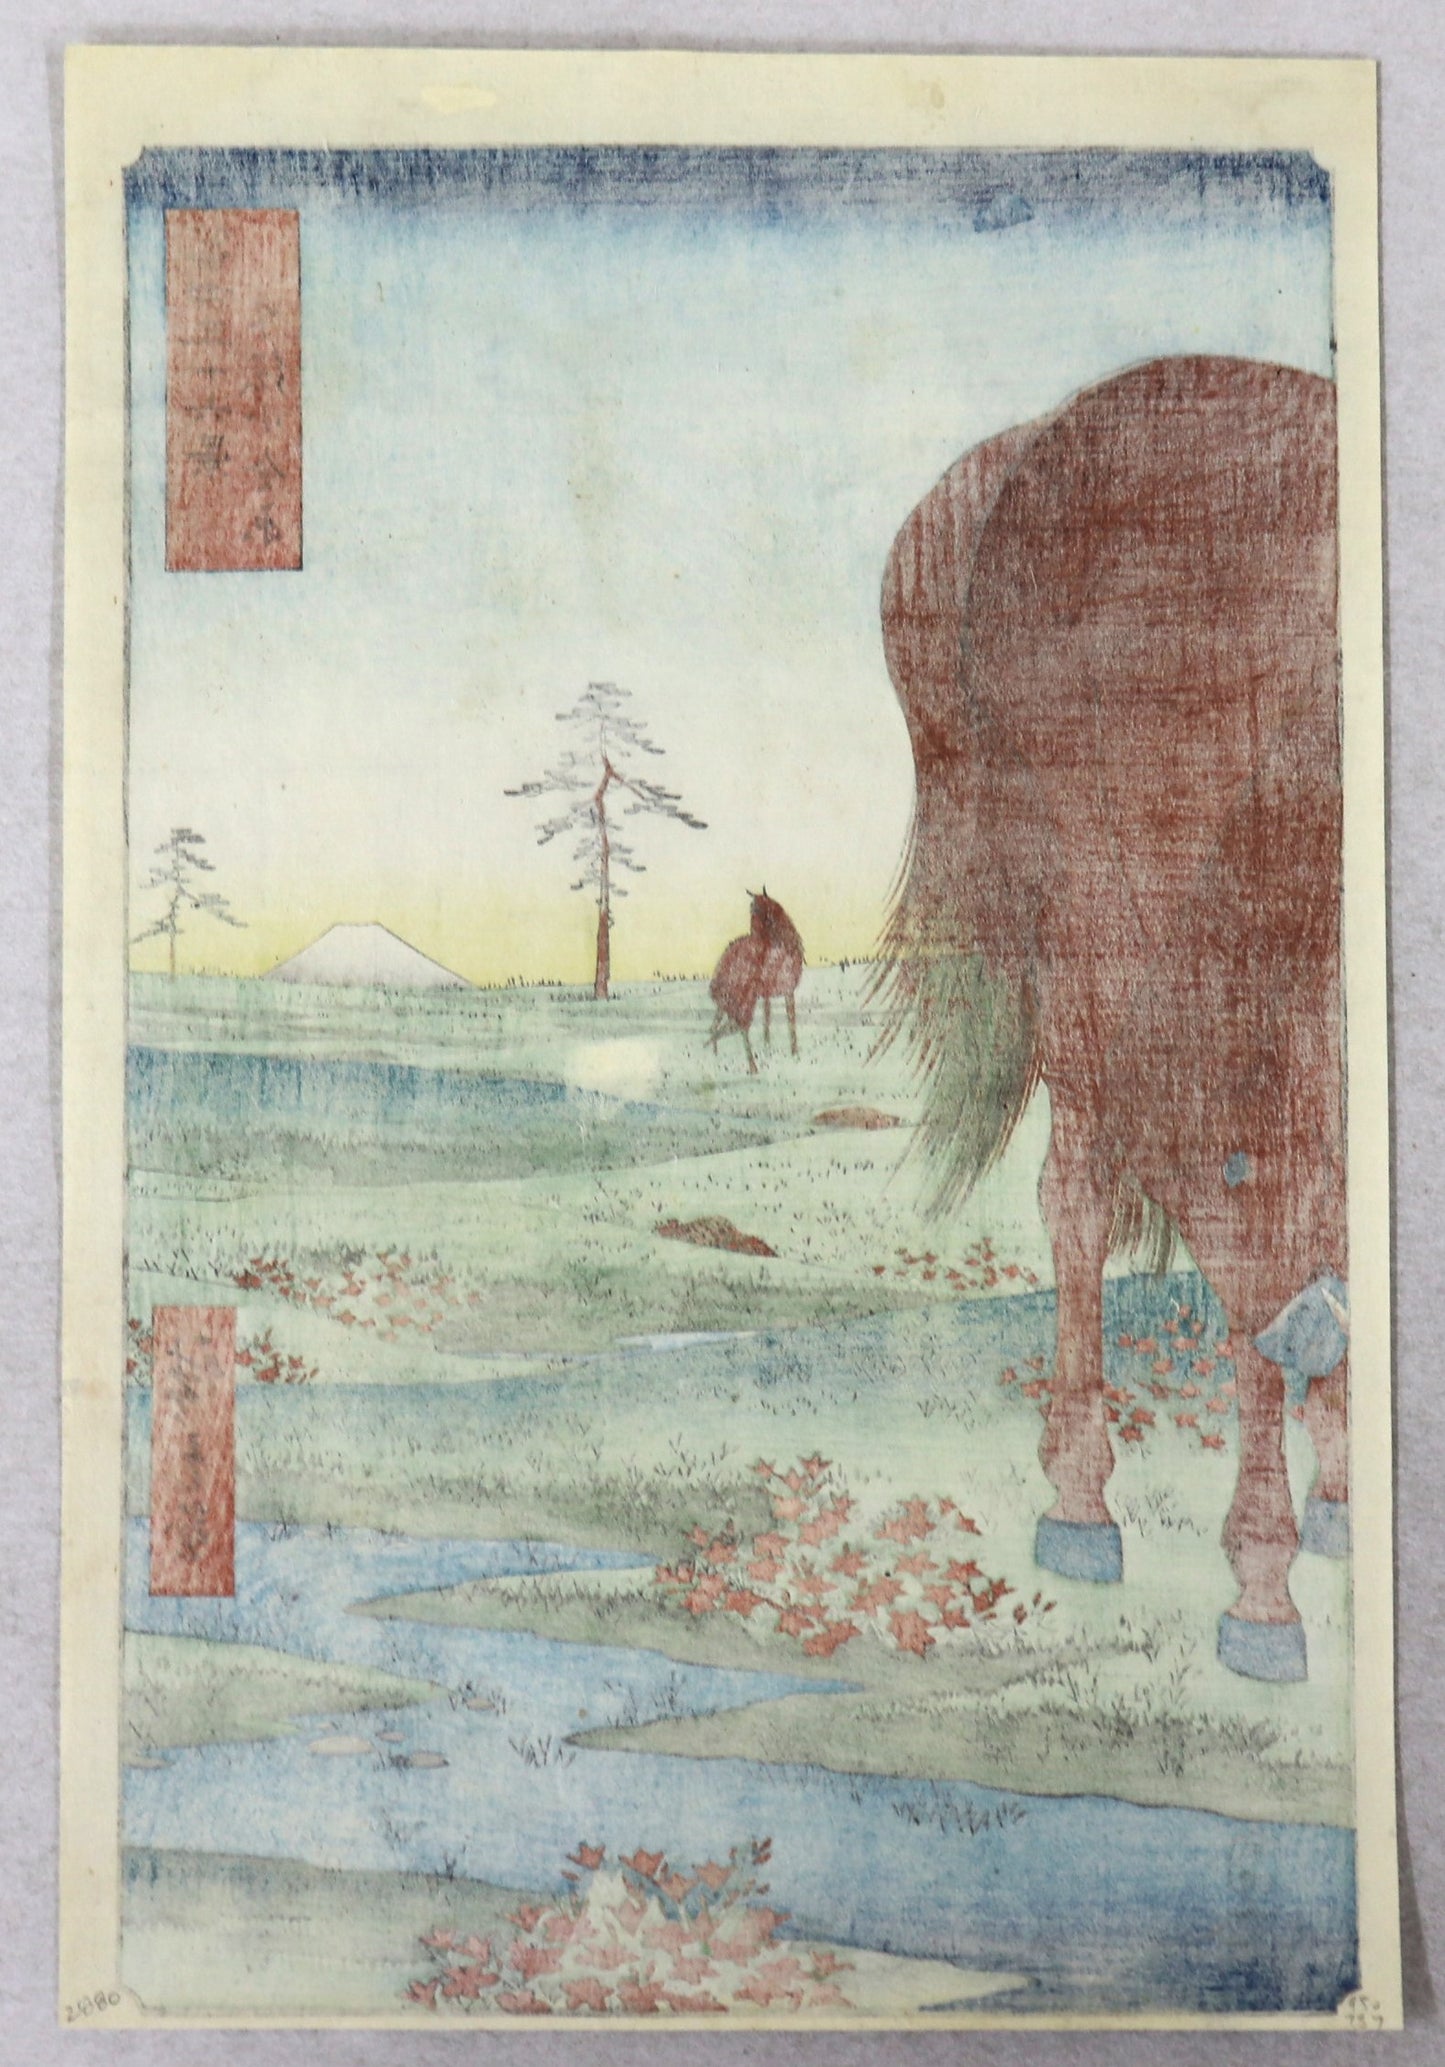 Kogane plain in Shimosa Province from the series " Thirty-Six Views of Mt.Fuji " by Hiroshige / La plaine de Kogane de la province de Shimosa de la série des "Trente-Six Vues du mont Fuji " par Hiroshige (1858)